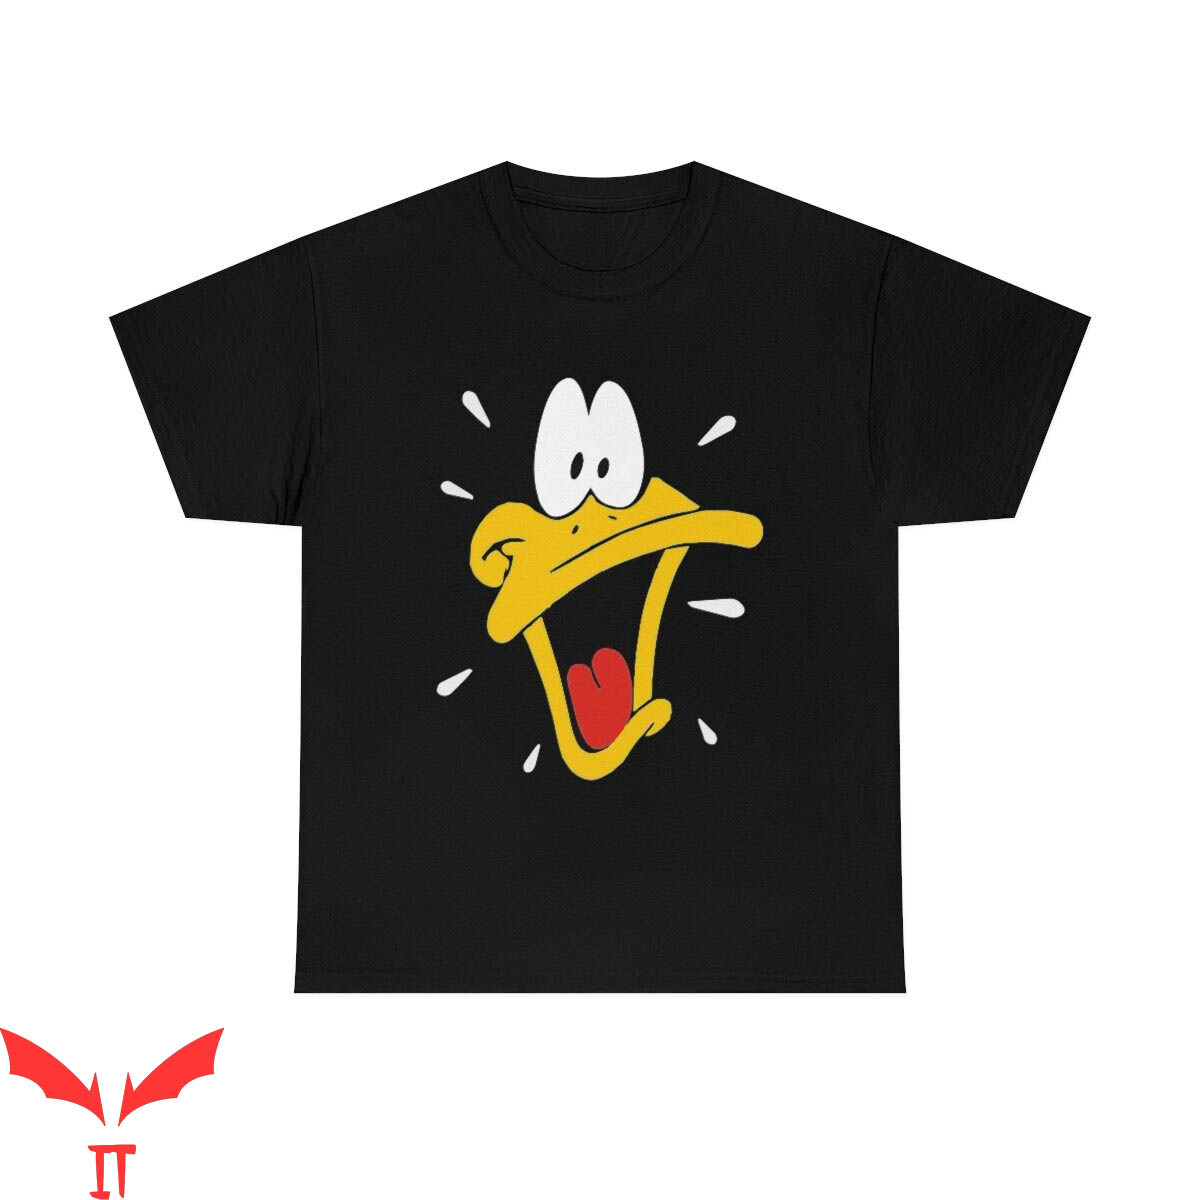 Looney Tunes Vintage T-Shirt 90s Daffy Duck Cartoon Funny